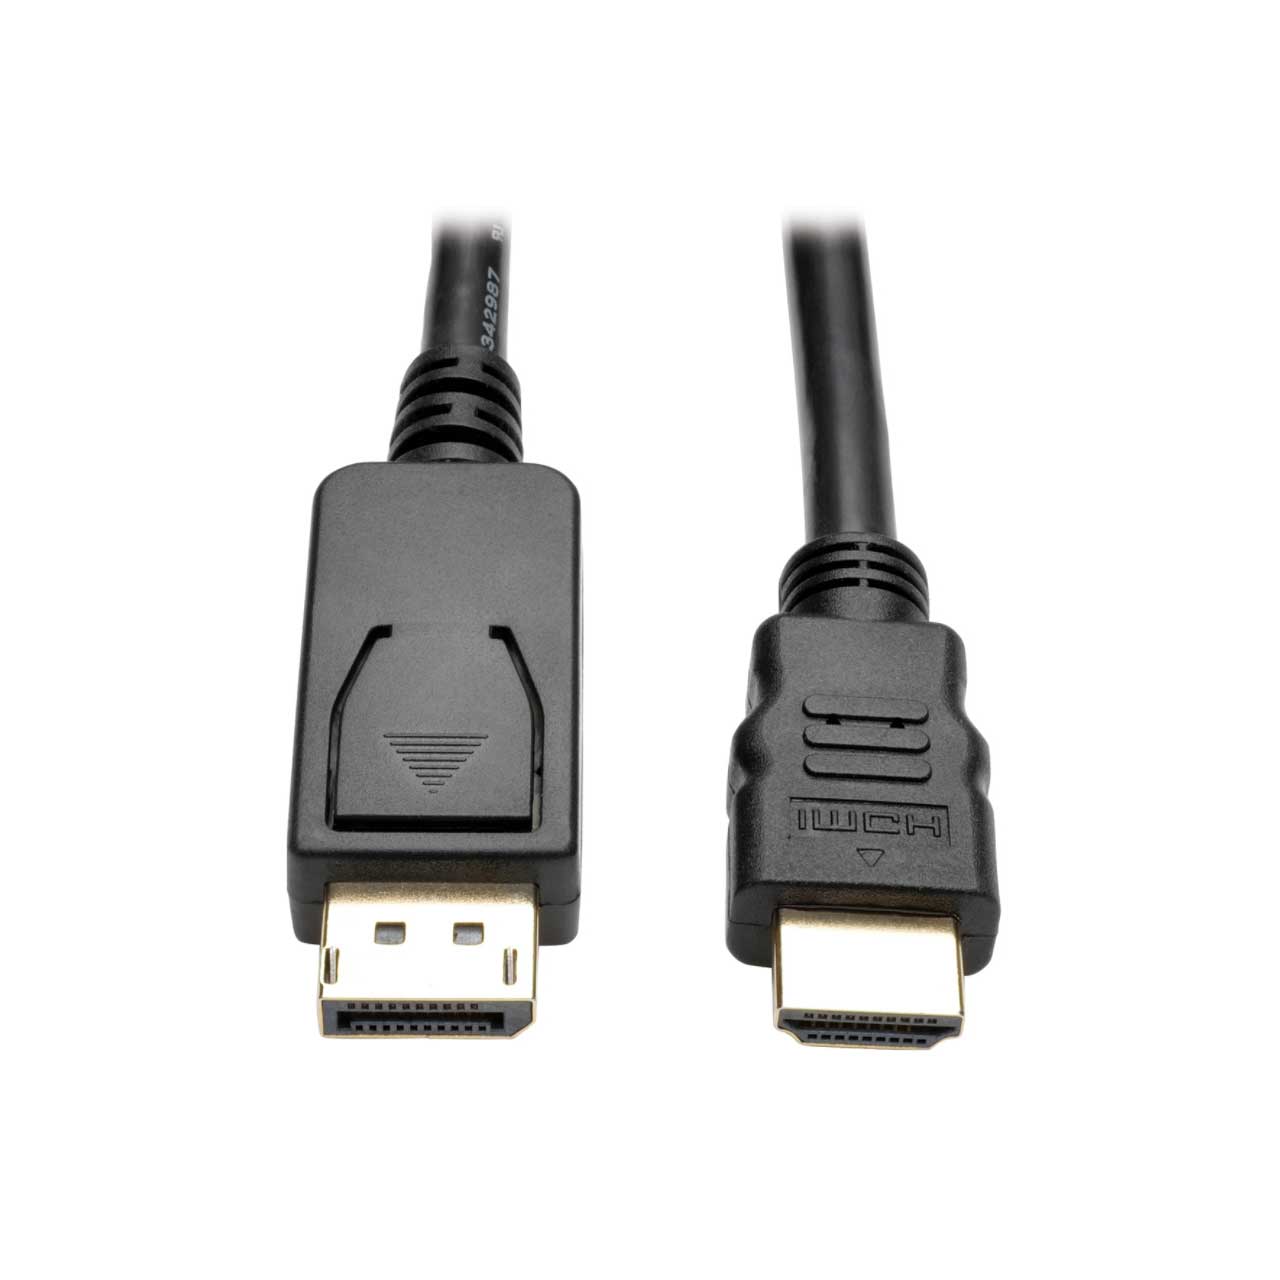 mini-DisplayPort 1.4 to DisplayPort 1.4 (passive), Adapters, Supply, Graphics Cards